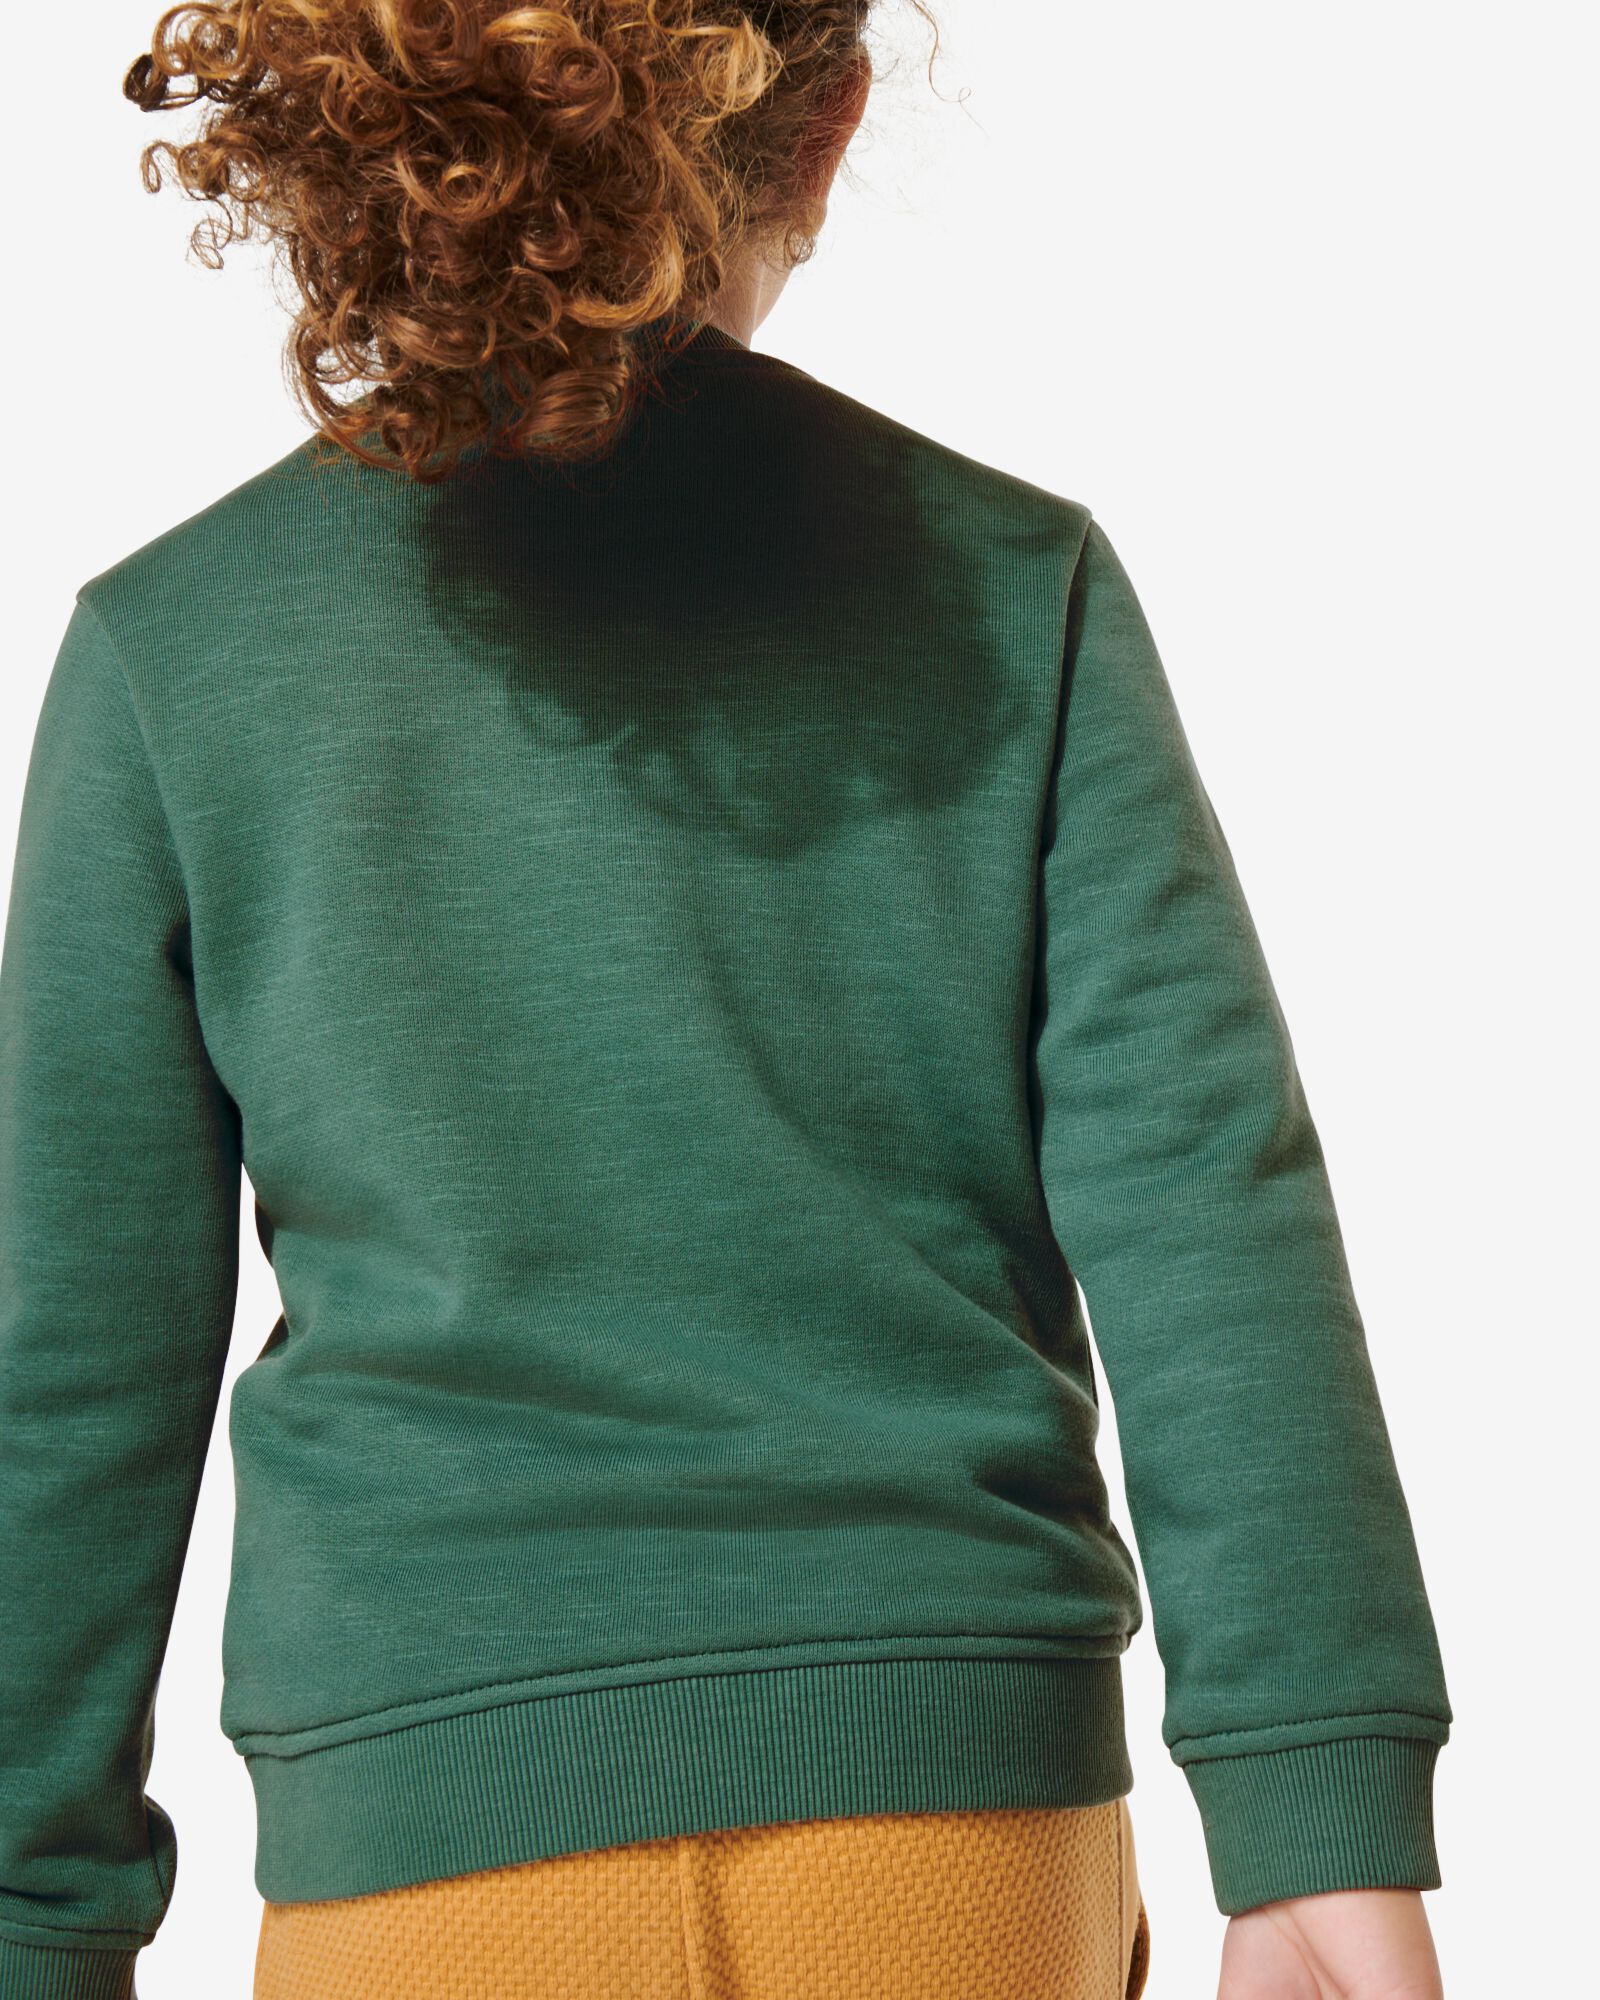 kinder sweater met borstvakje groen - 1000029808 - HEMA